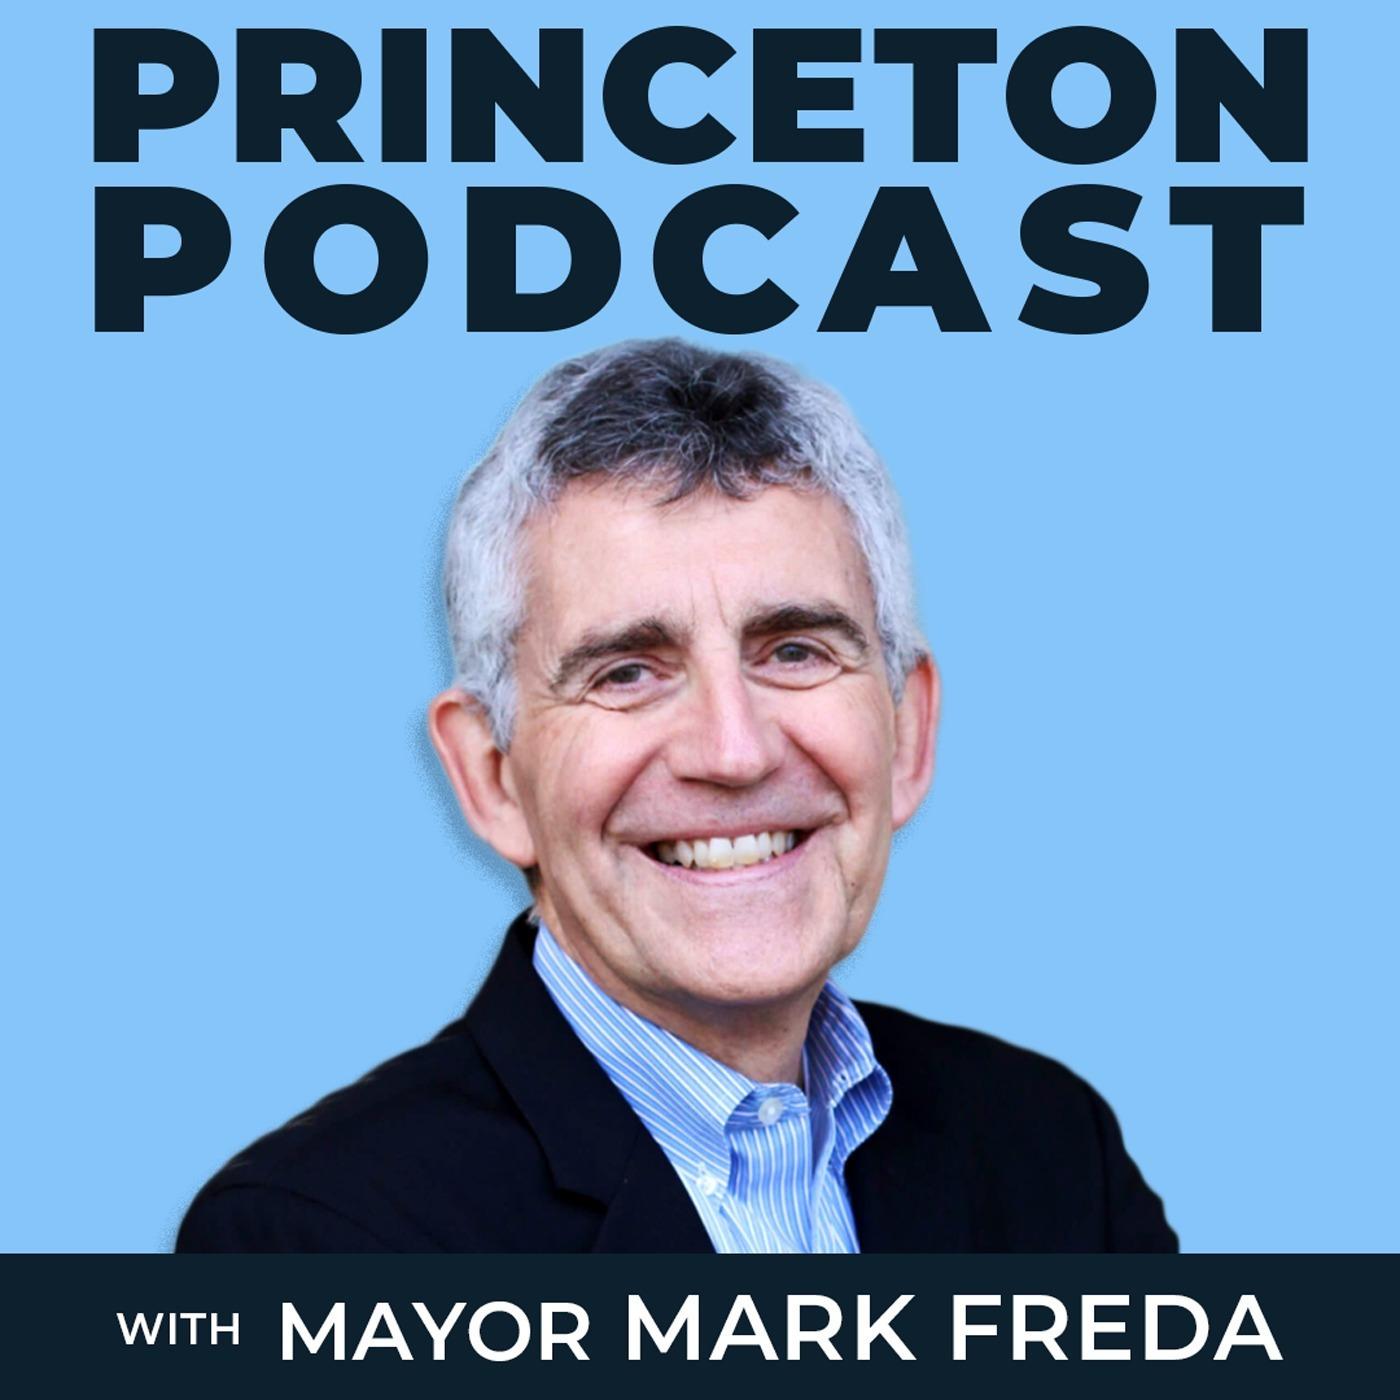 Princeton Podcast